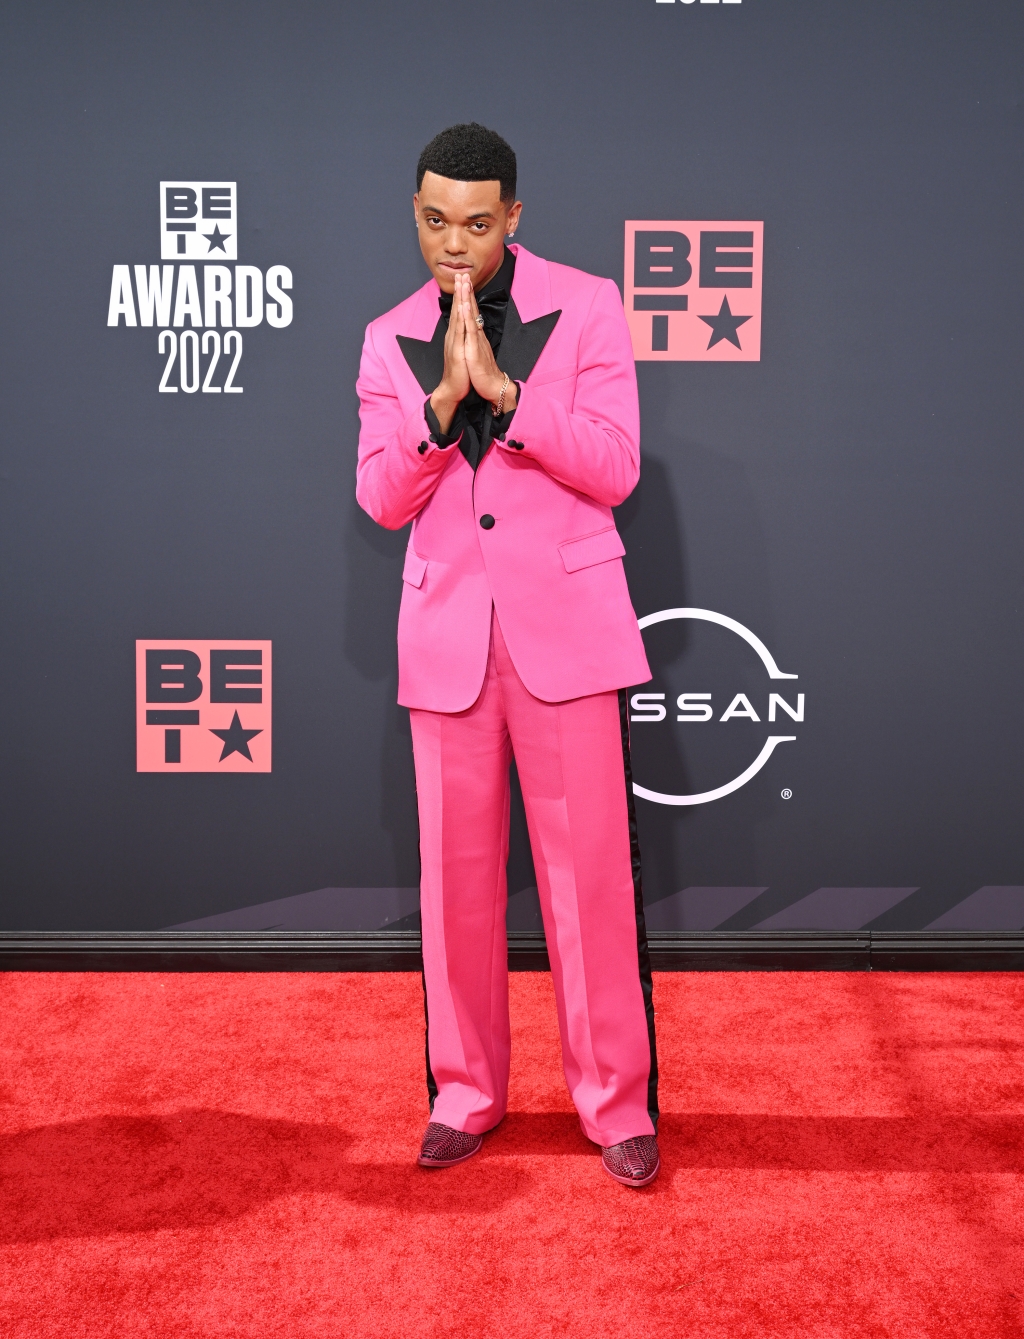 jabari-banks-wears-hot-pink-suit-2022-bet-awards